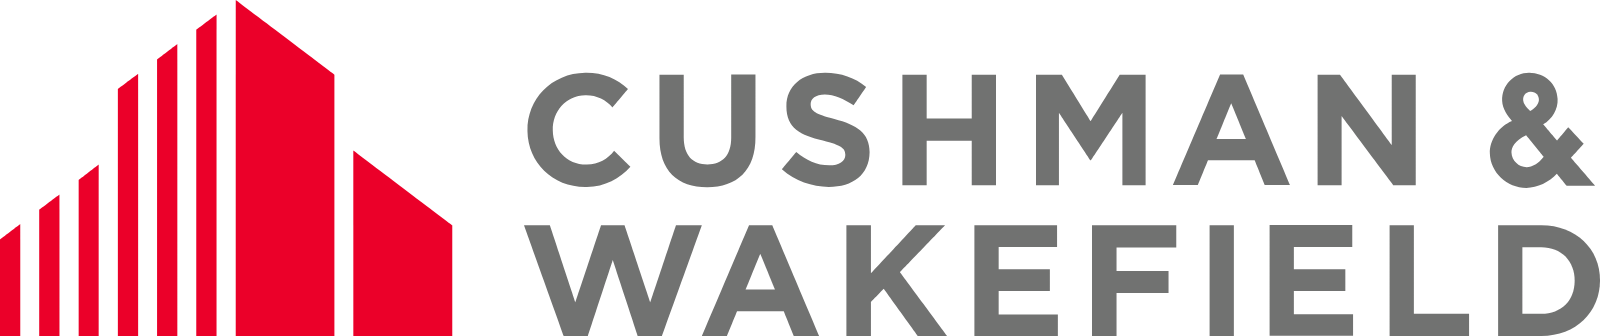 Cushman & Wakefield
 logo large (transparent PNG)